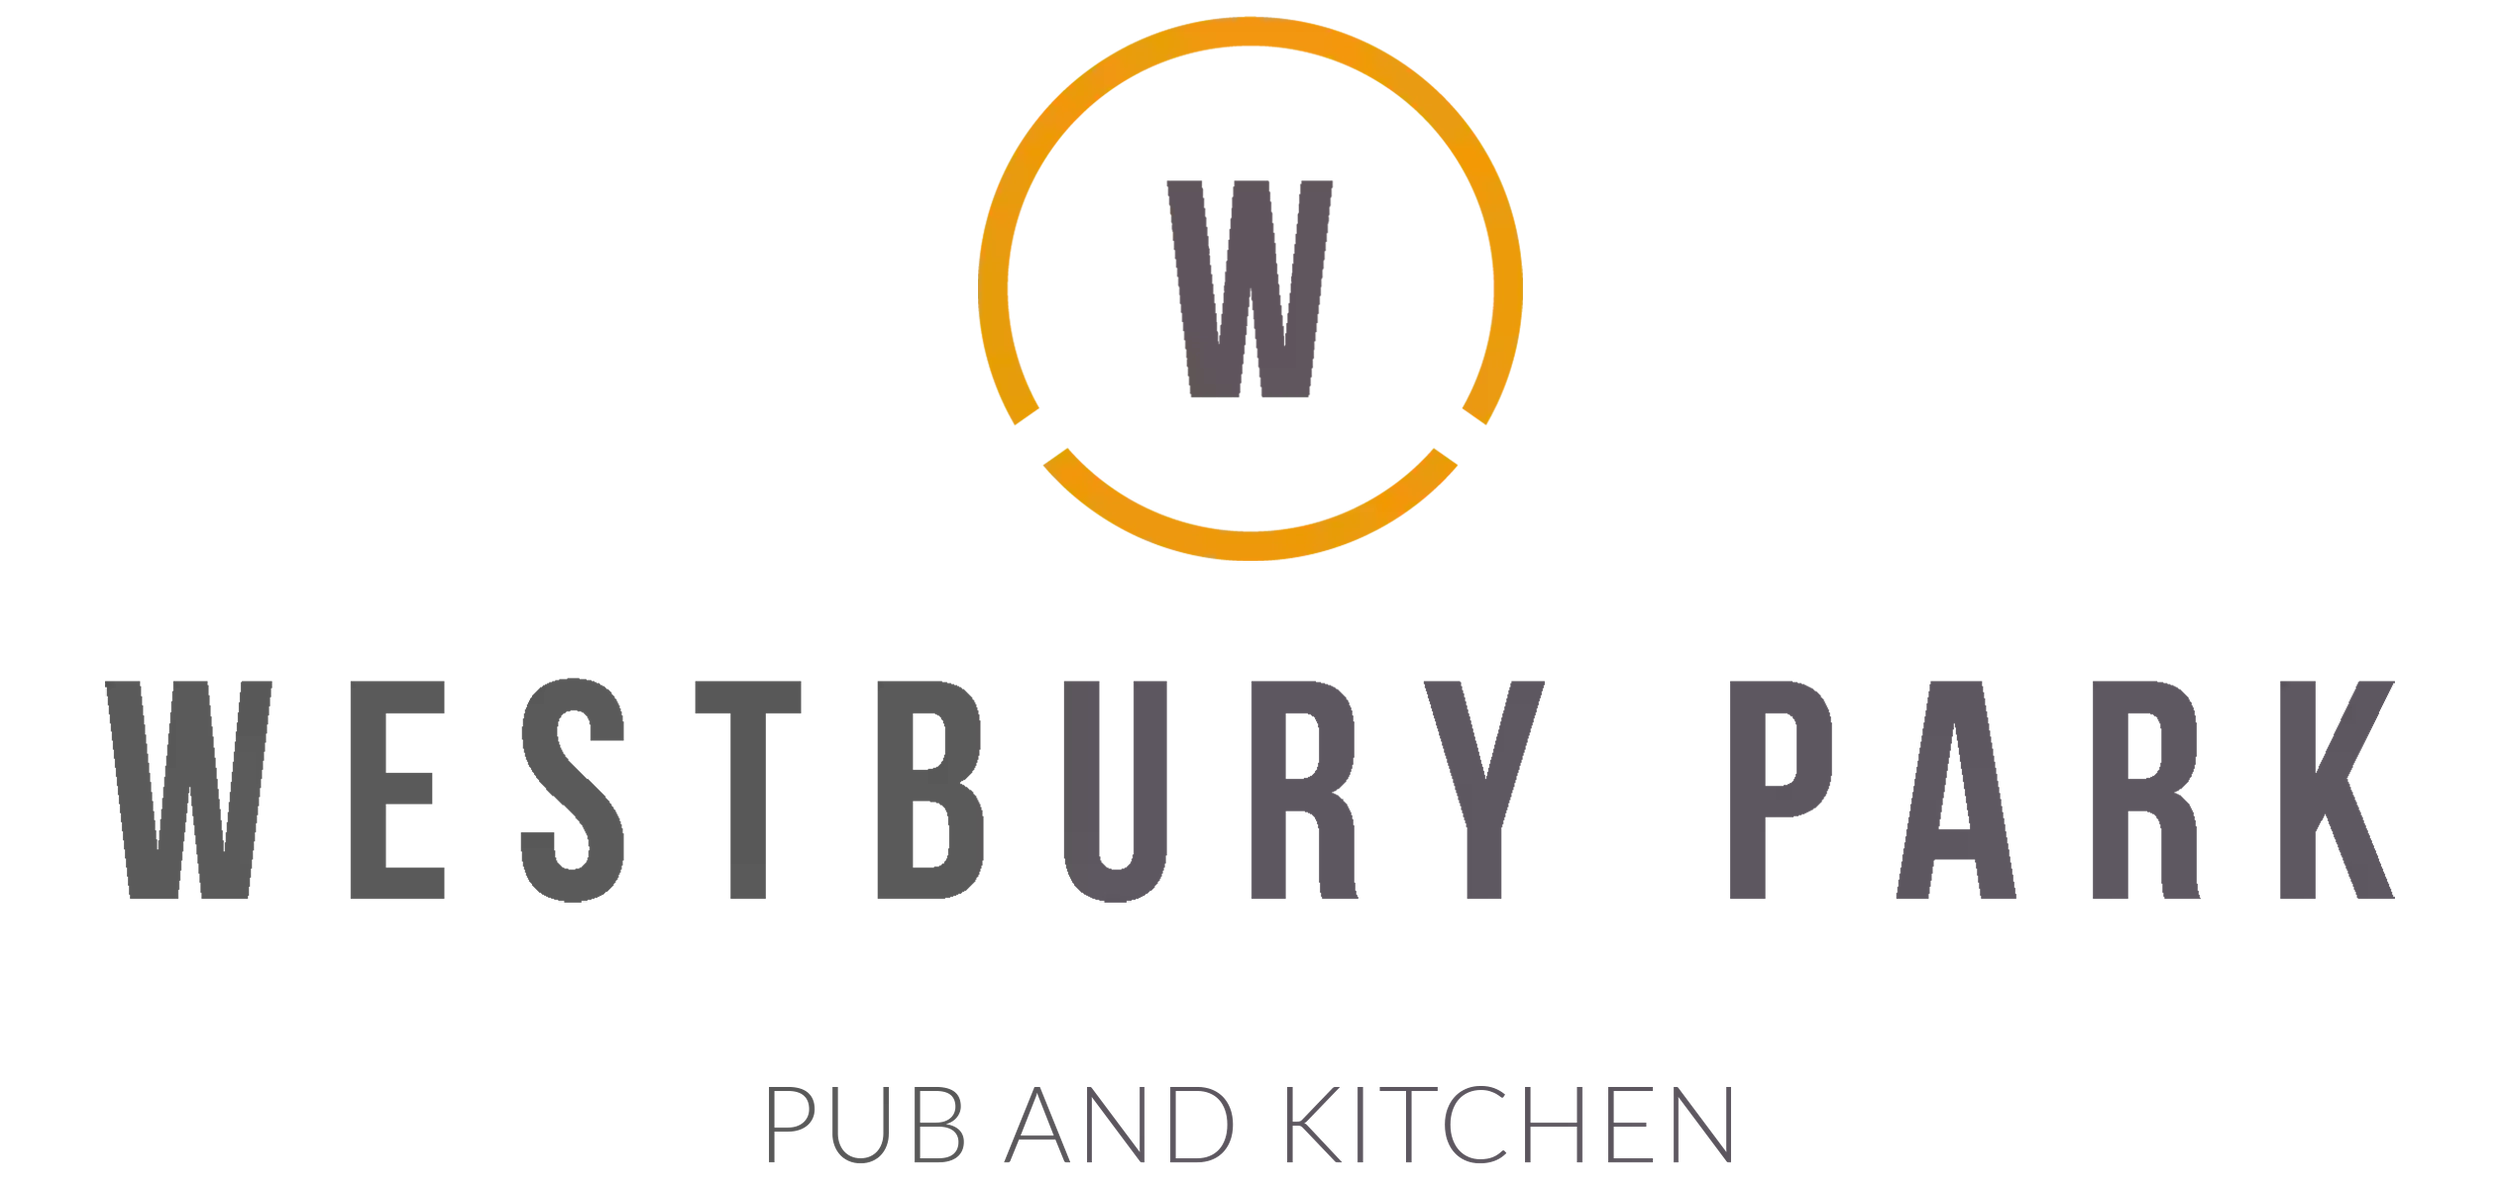 Westbury Park Pub and Kitchen